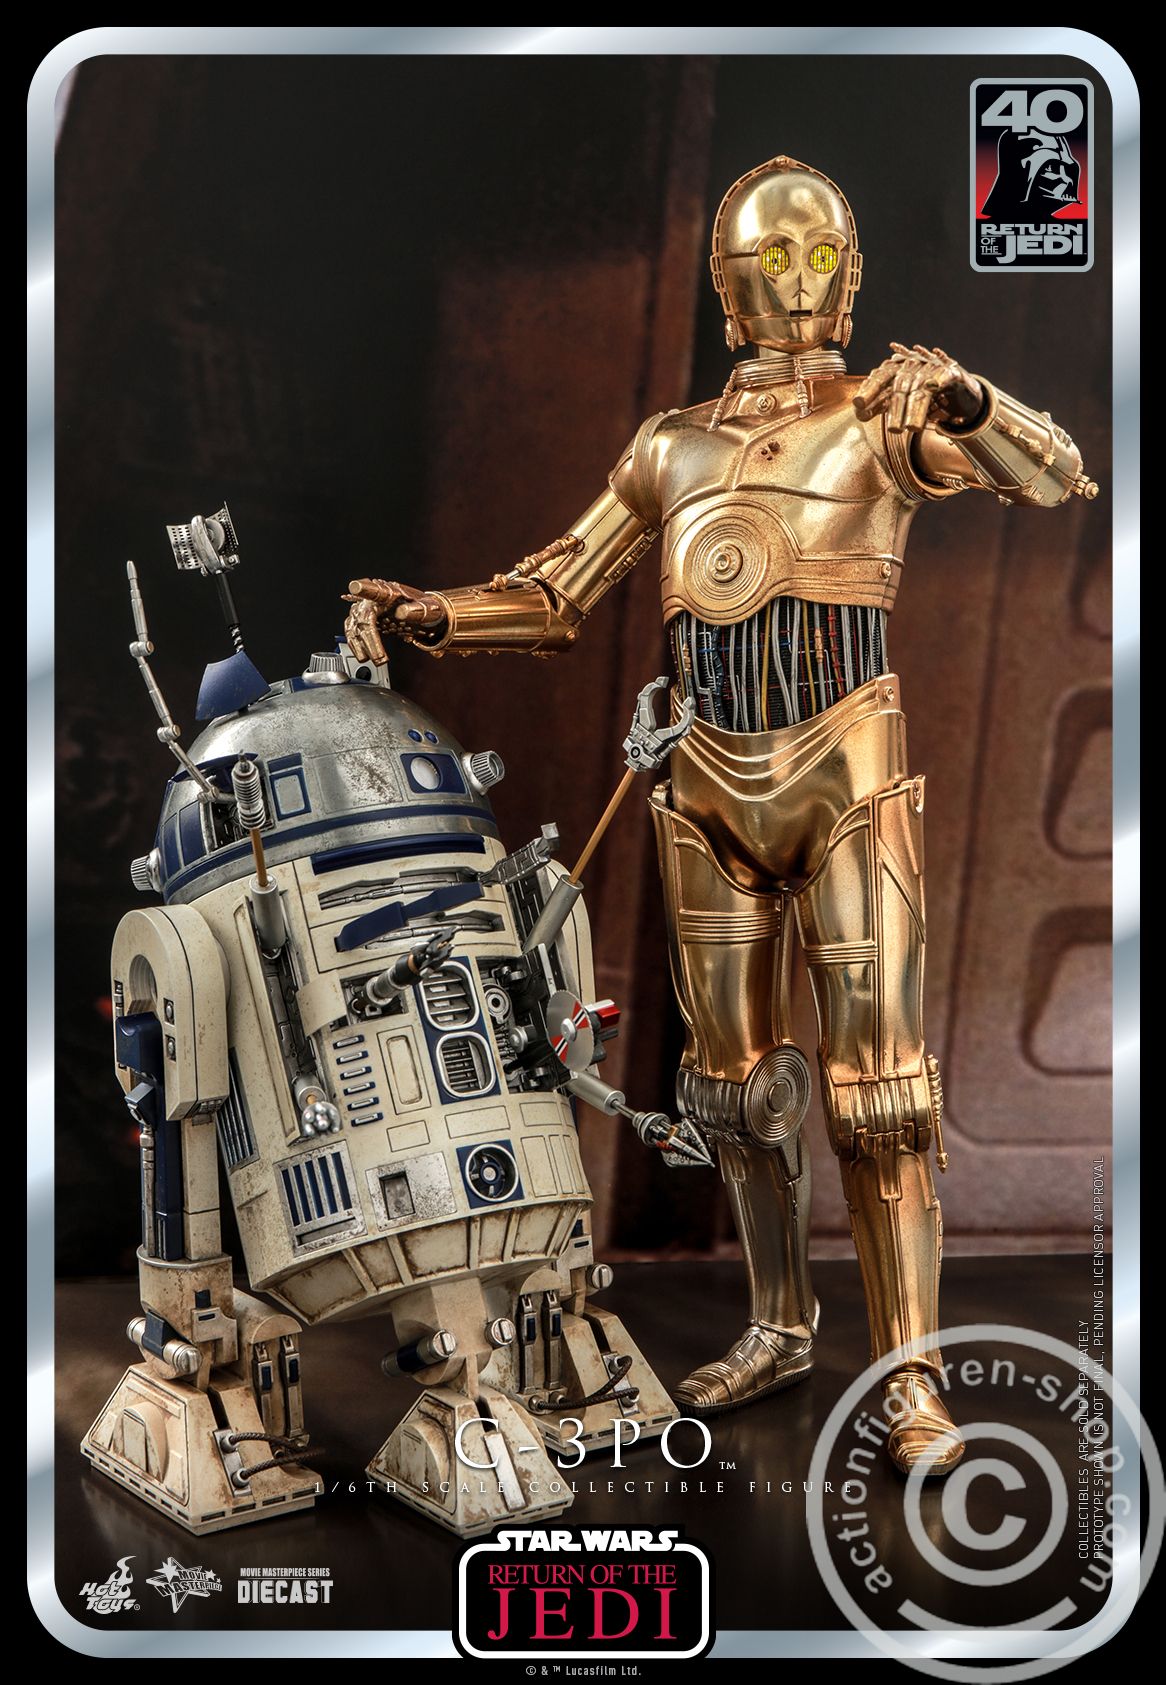 Star Wars Episode VI: Return of the Jedi – C-3PO